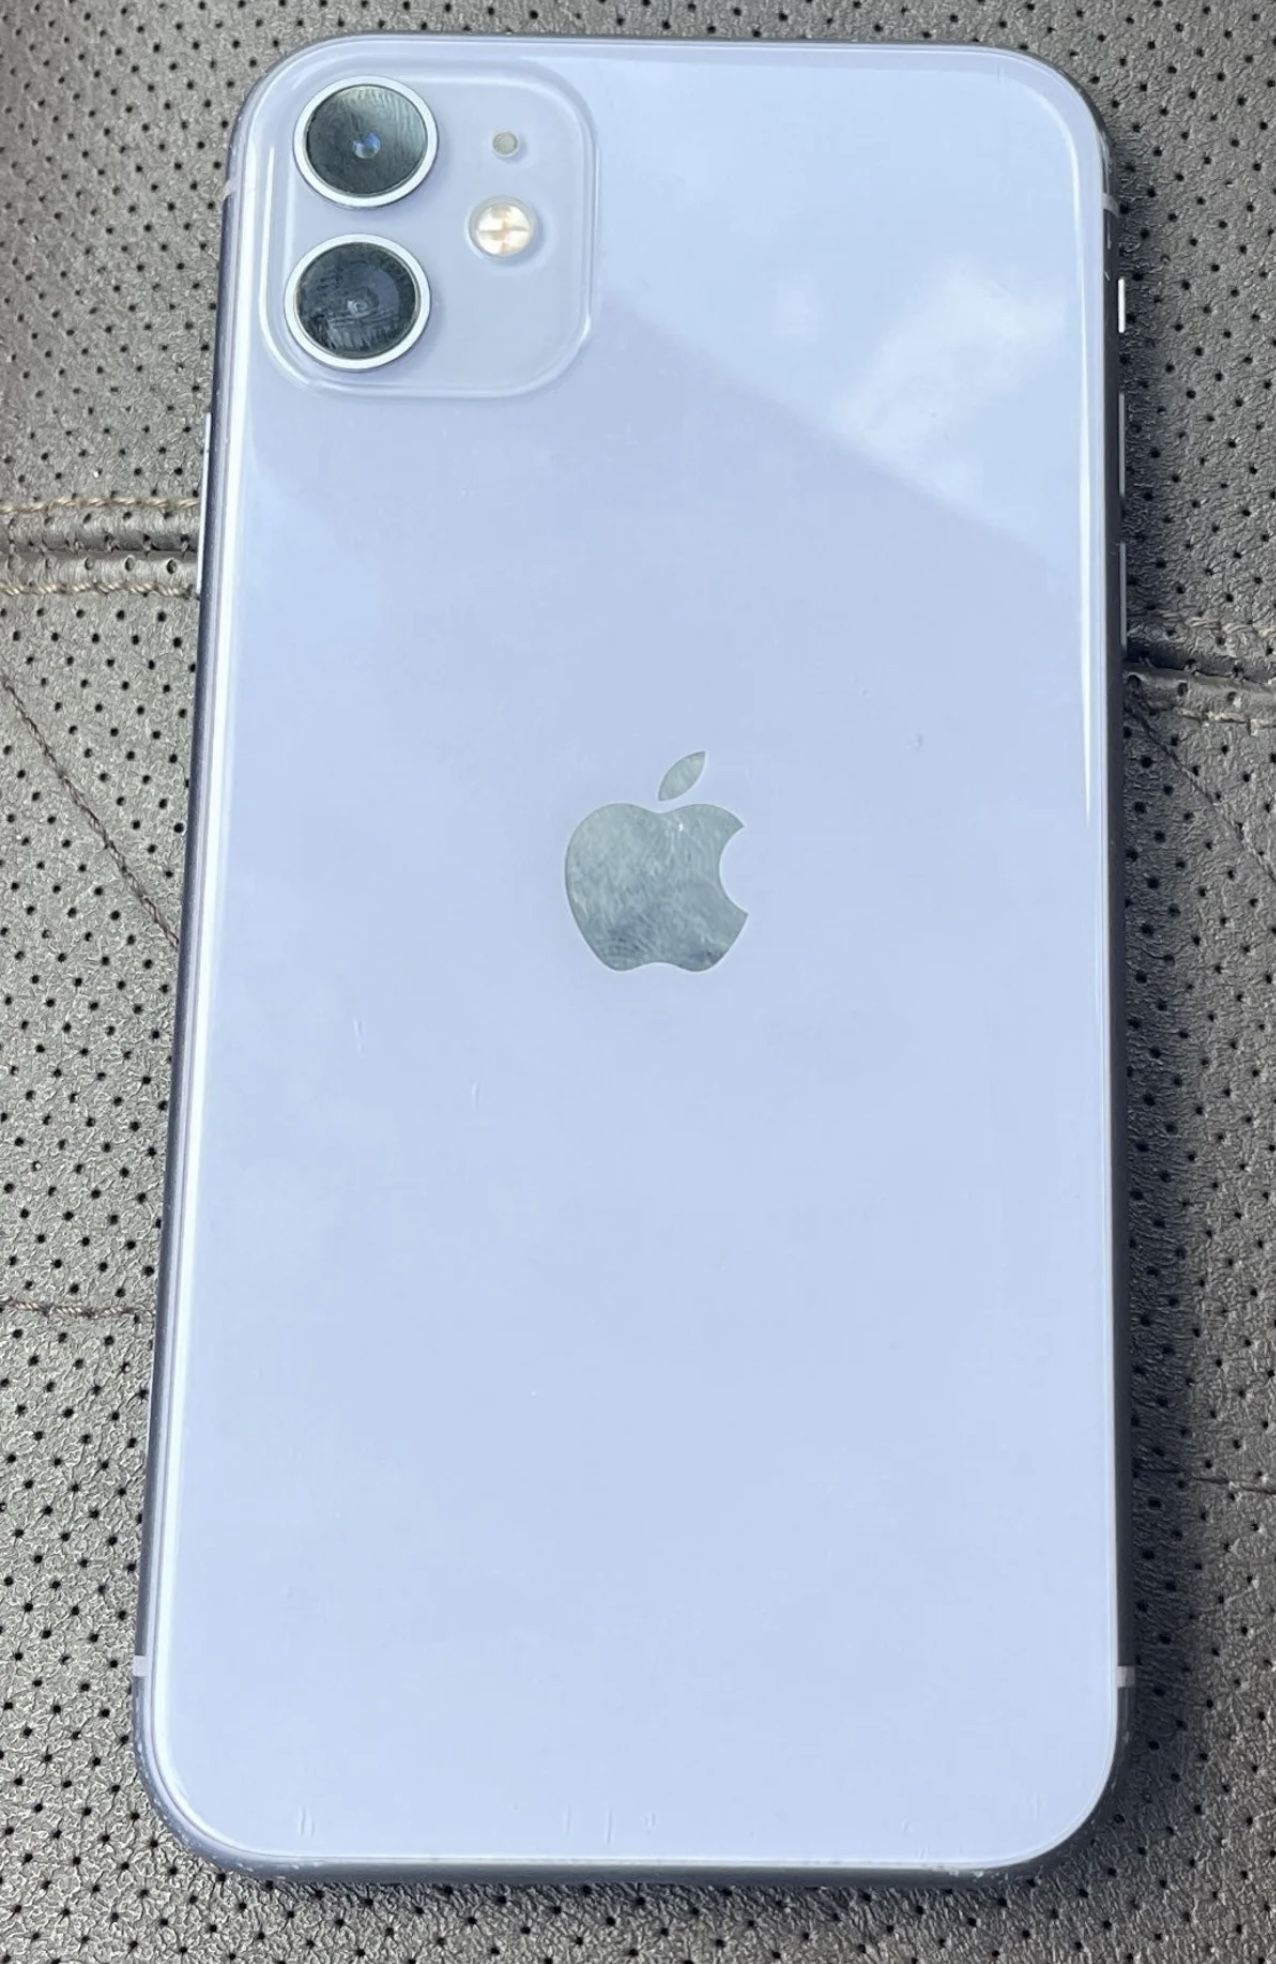 Purple iPhone 11 for sale 64 gb. Obo